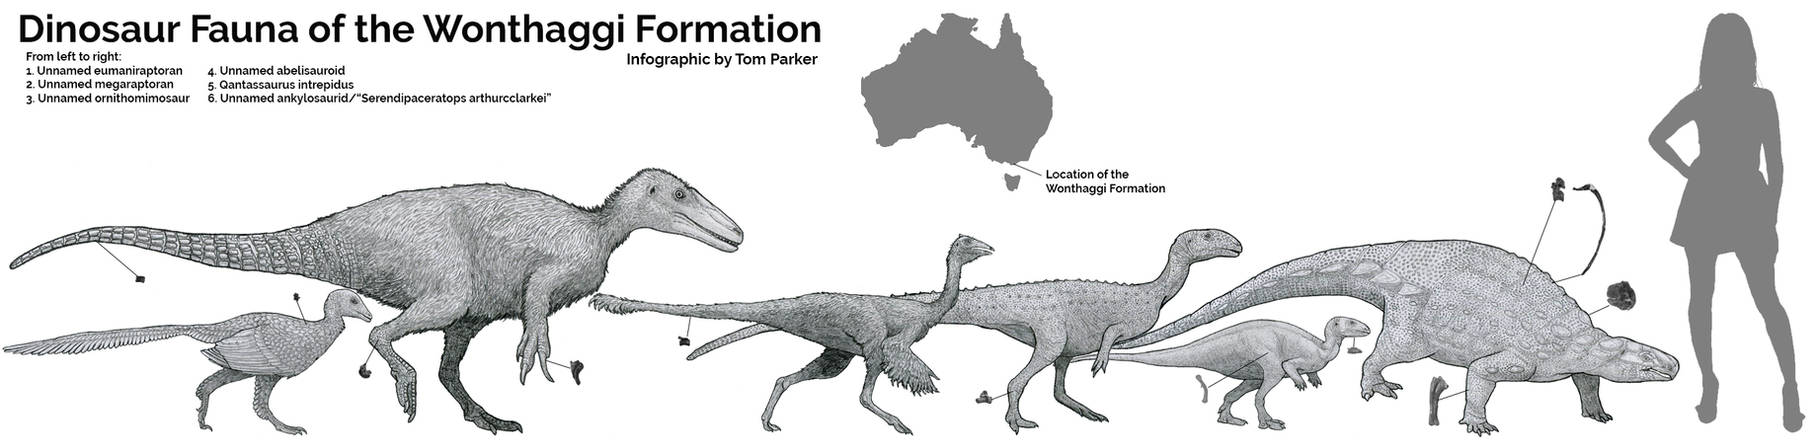 Dinosaur Fauna of the Wonthaggi Formation